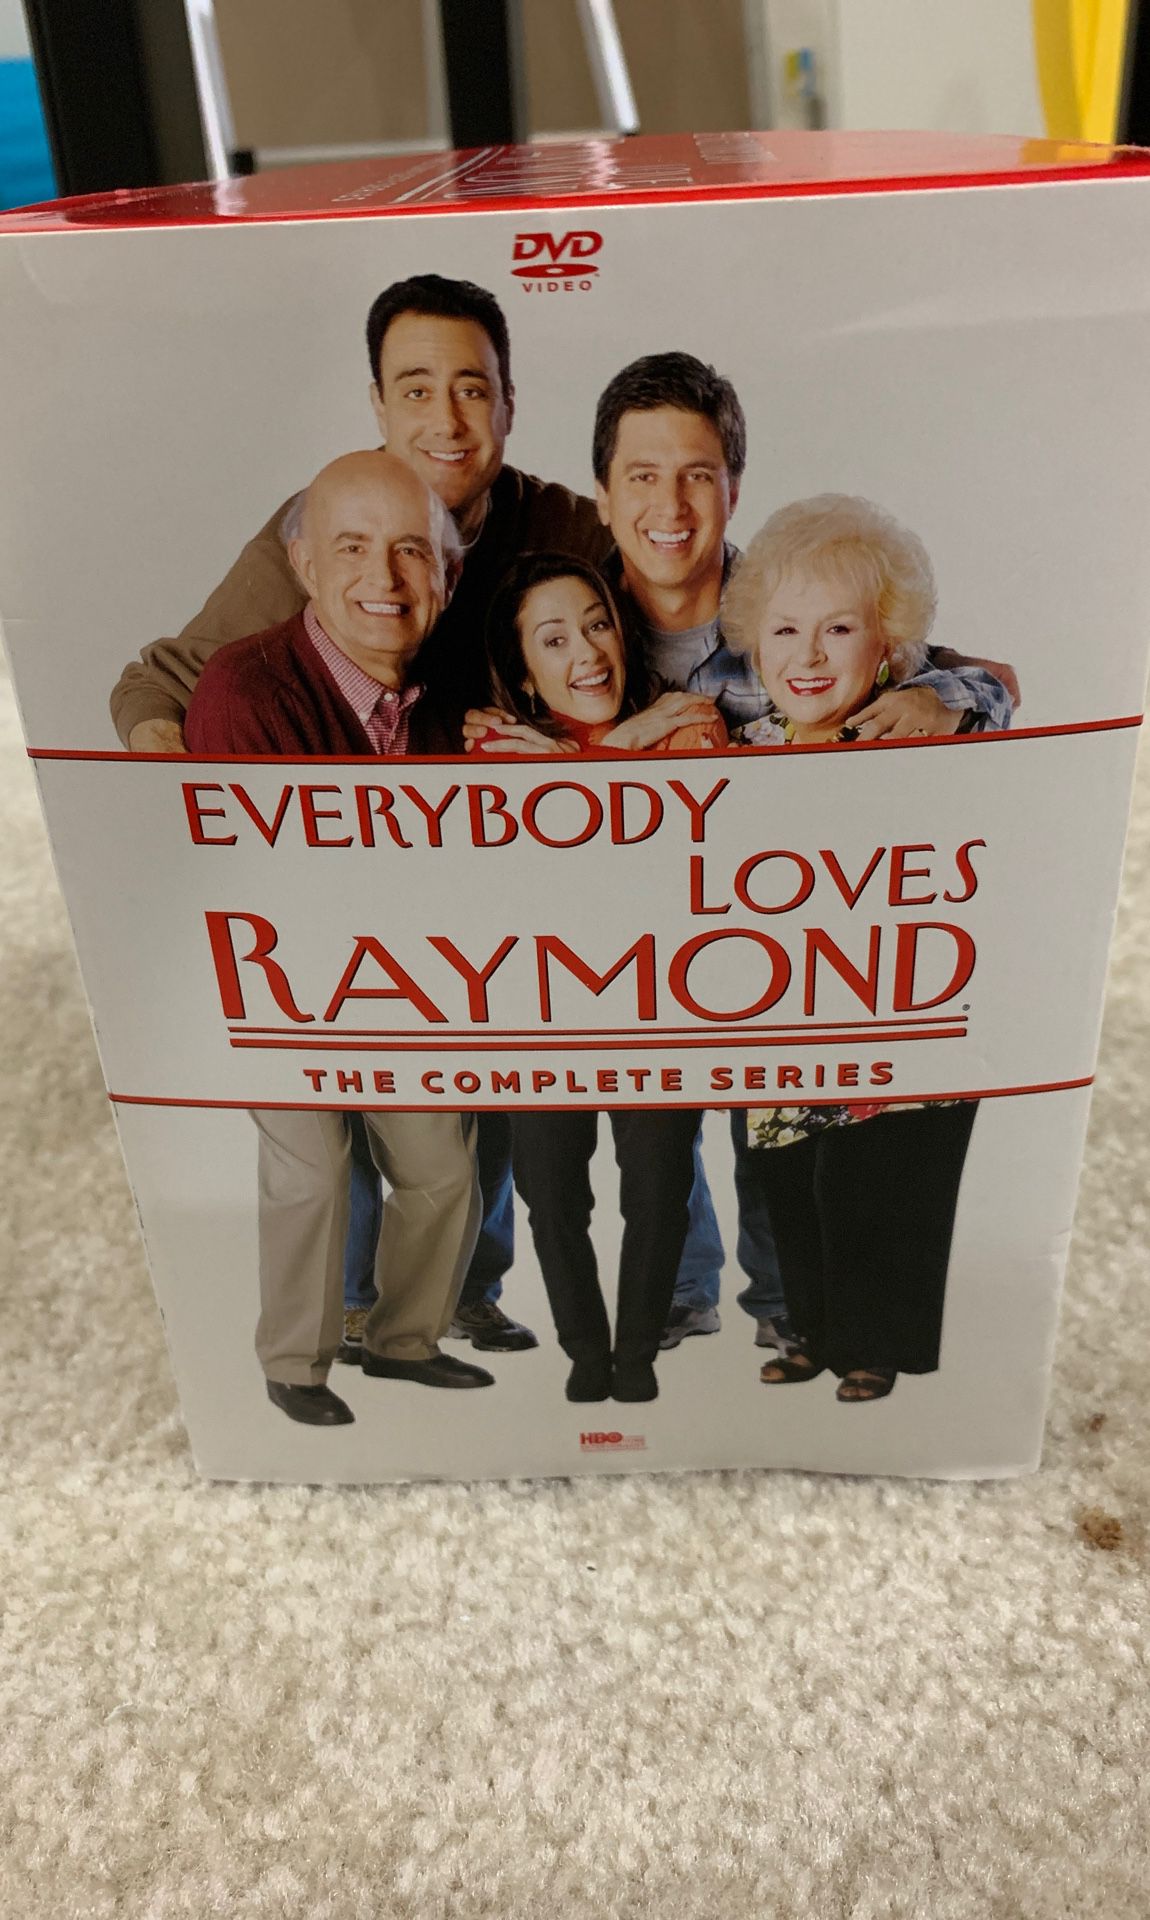 Everybody loves Raymond’s complete series